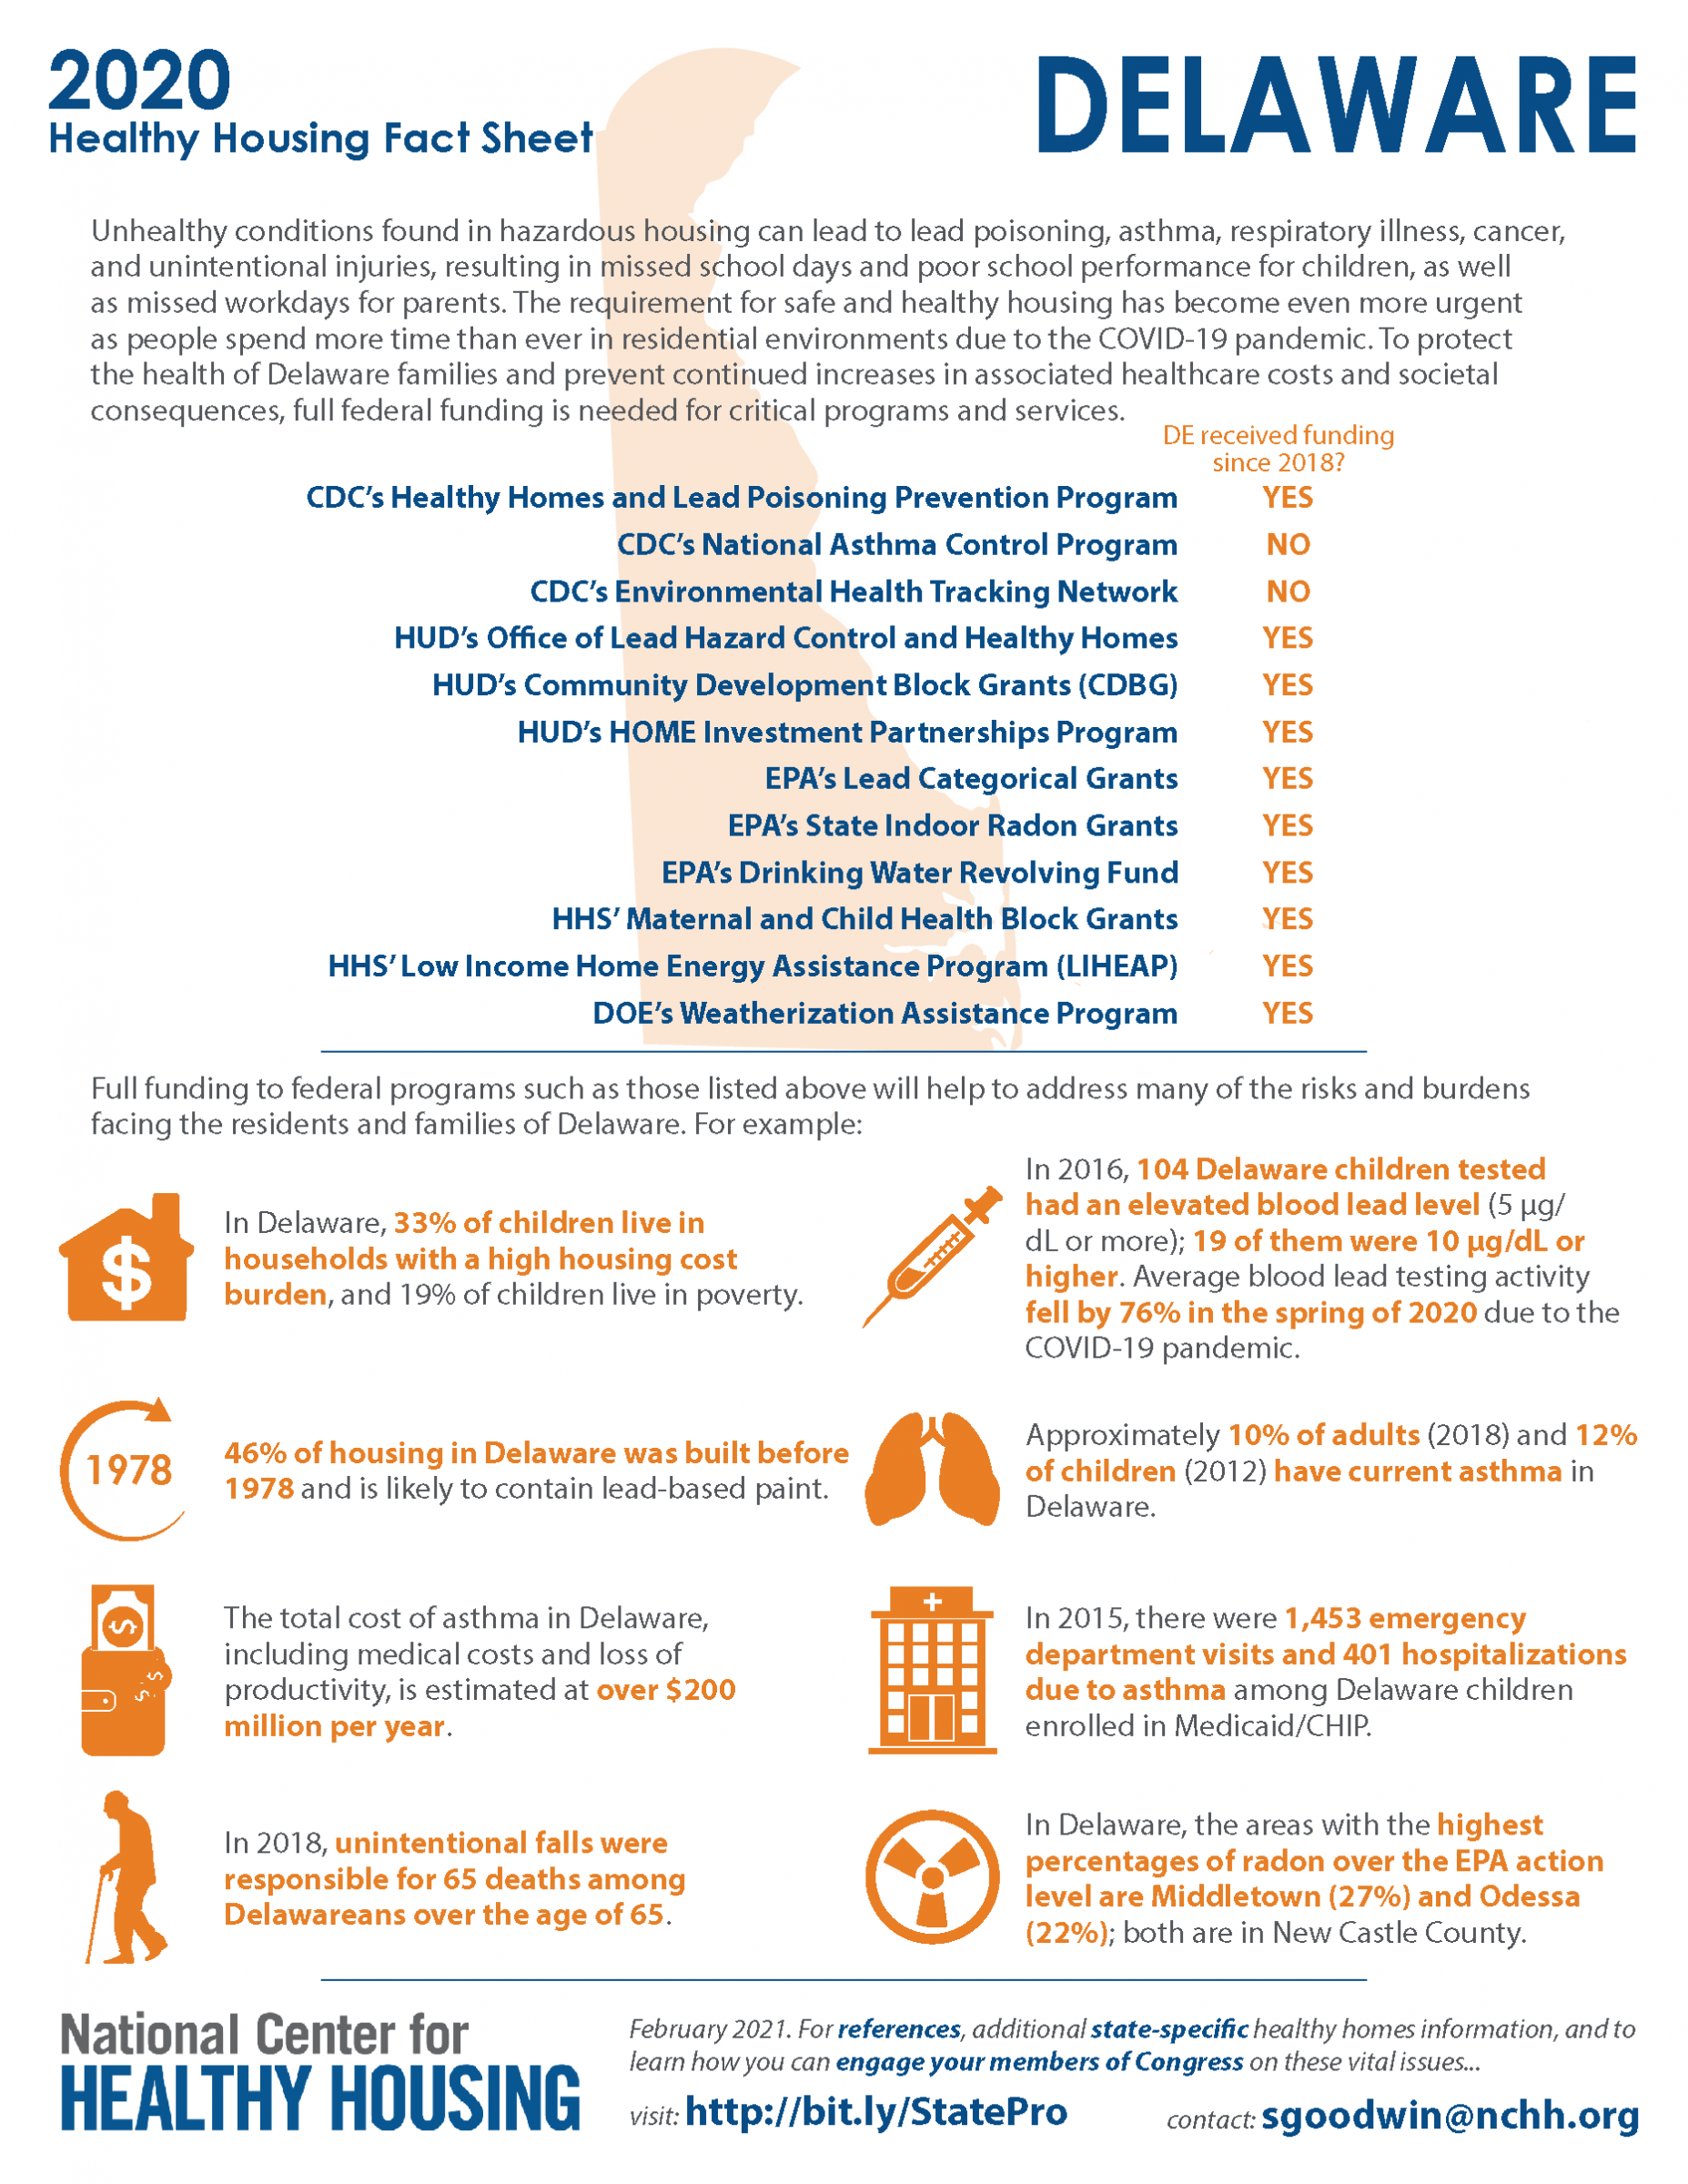 Healthy Housing Fact Sheet - Delaware 2020